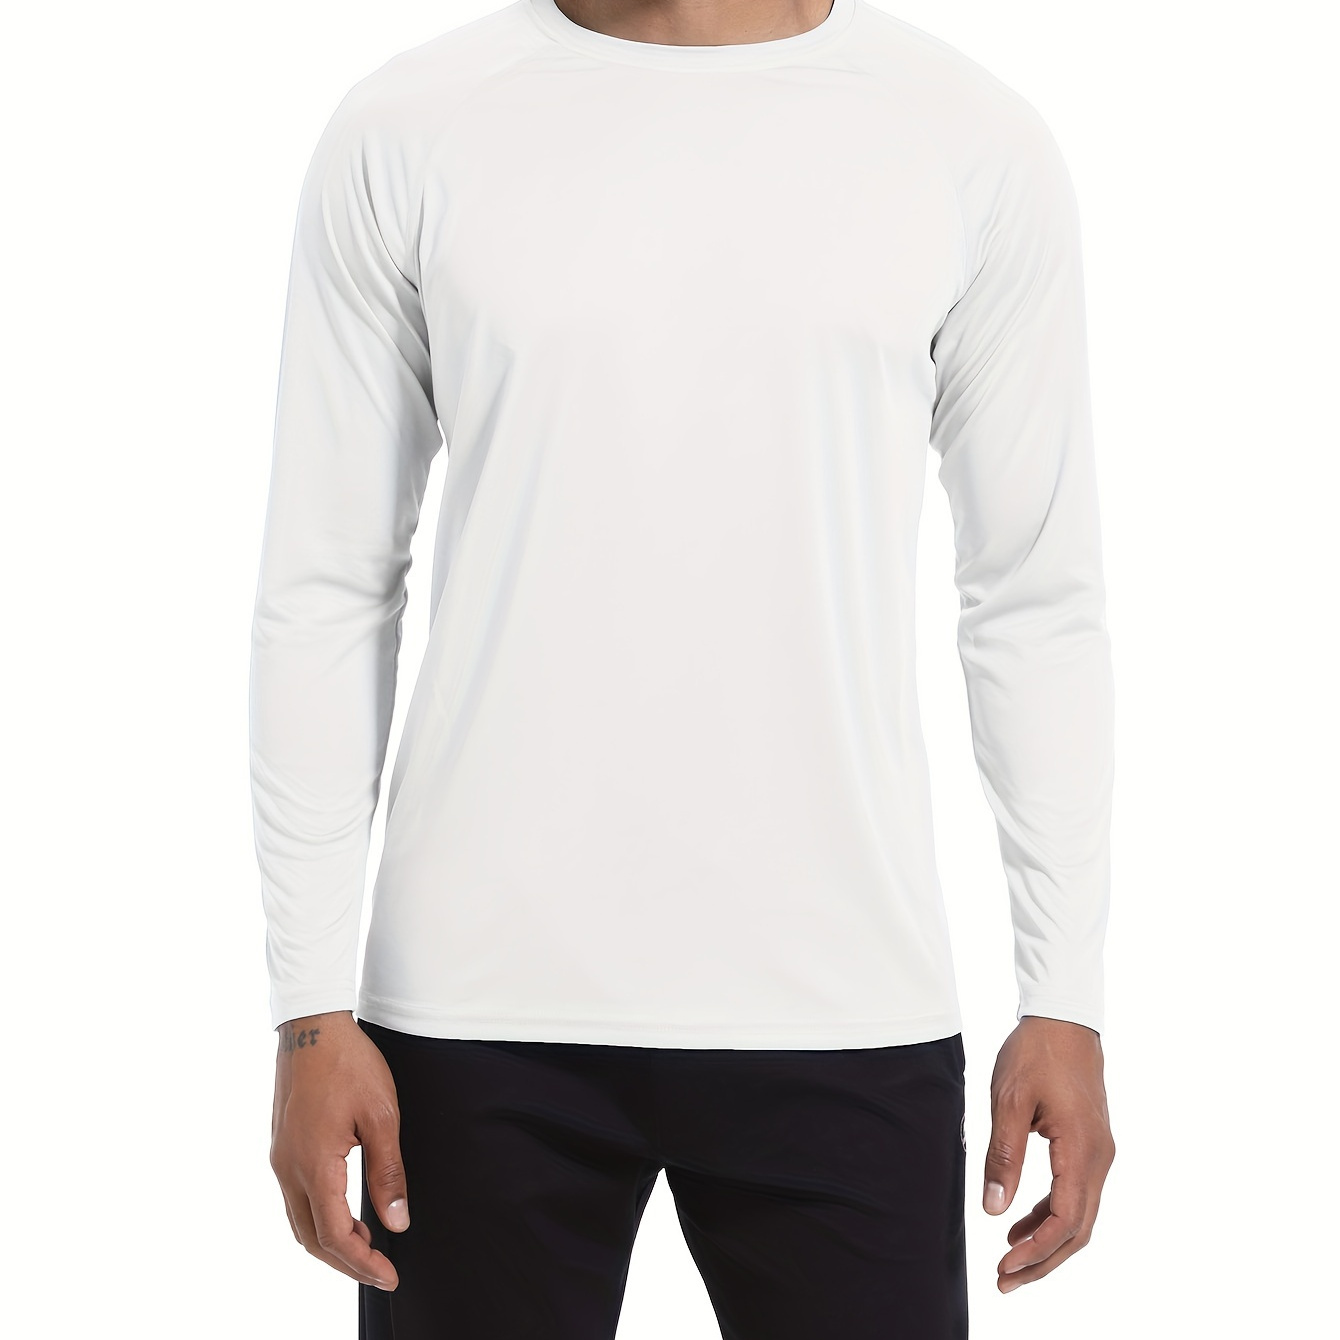 

Men's Sun Protection Shirt Long Sleeve Rash Prevention Fishing Outdoor Fitness Running Sport Lightweight T-shirt